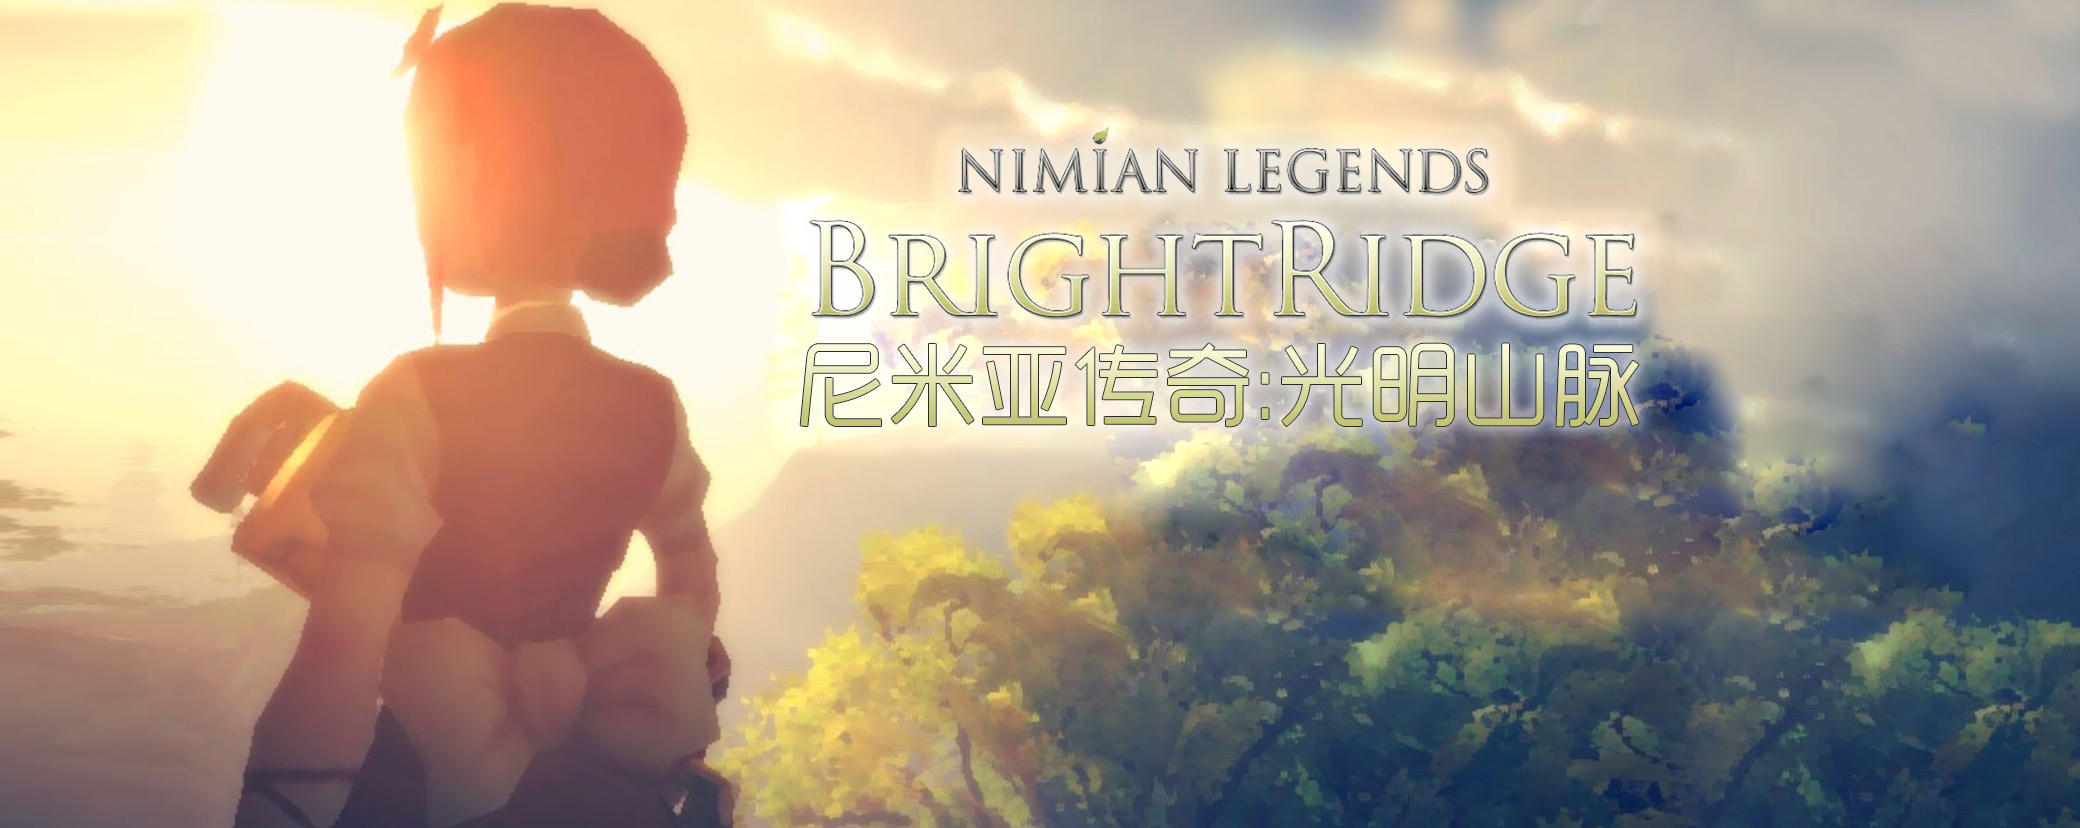 Banner of Lendas de Nimian: BrightRidge 